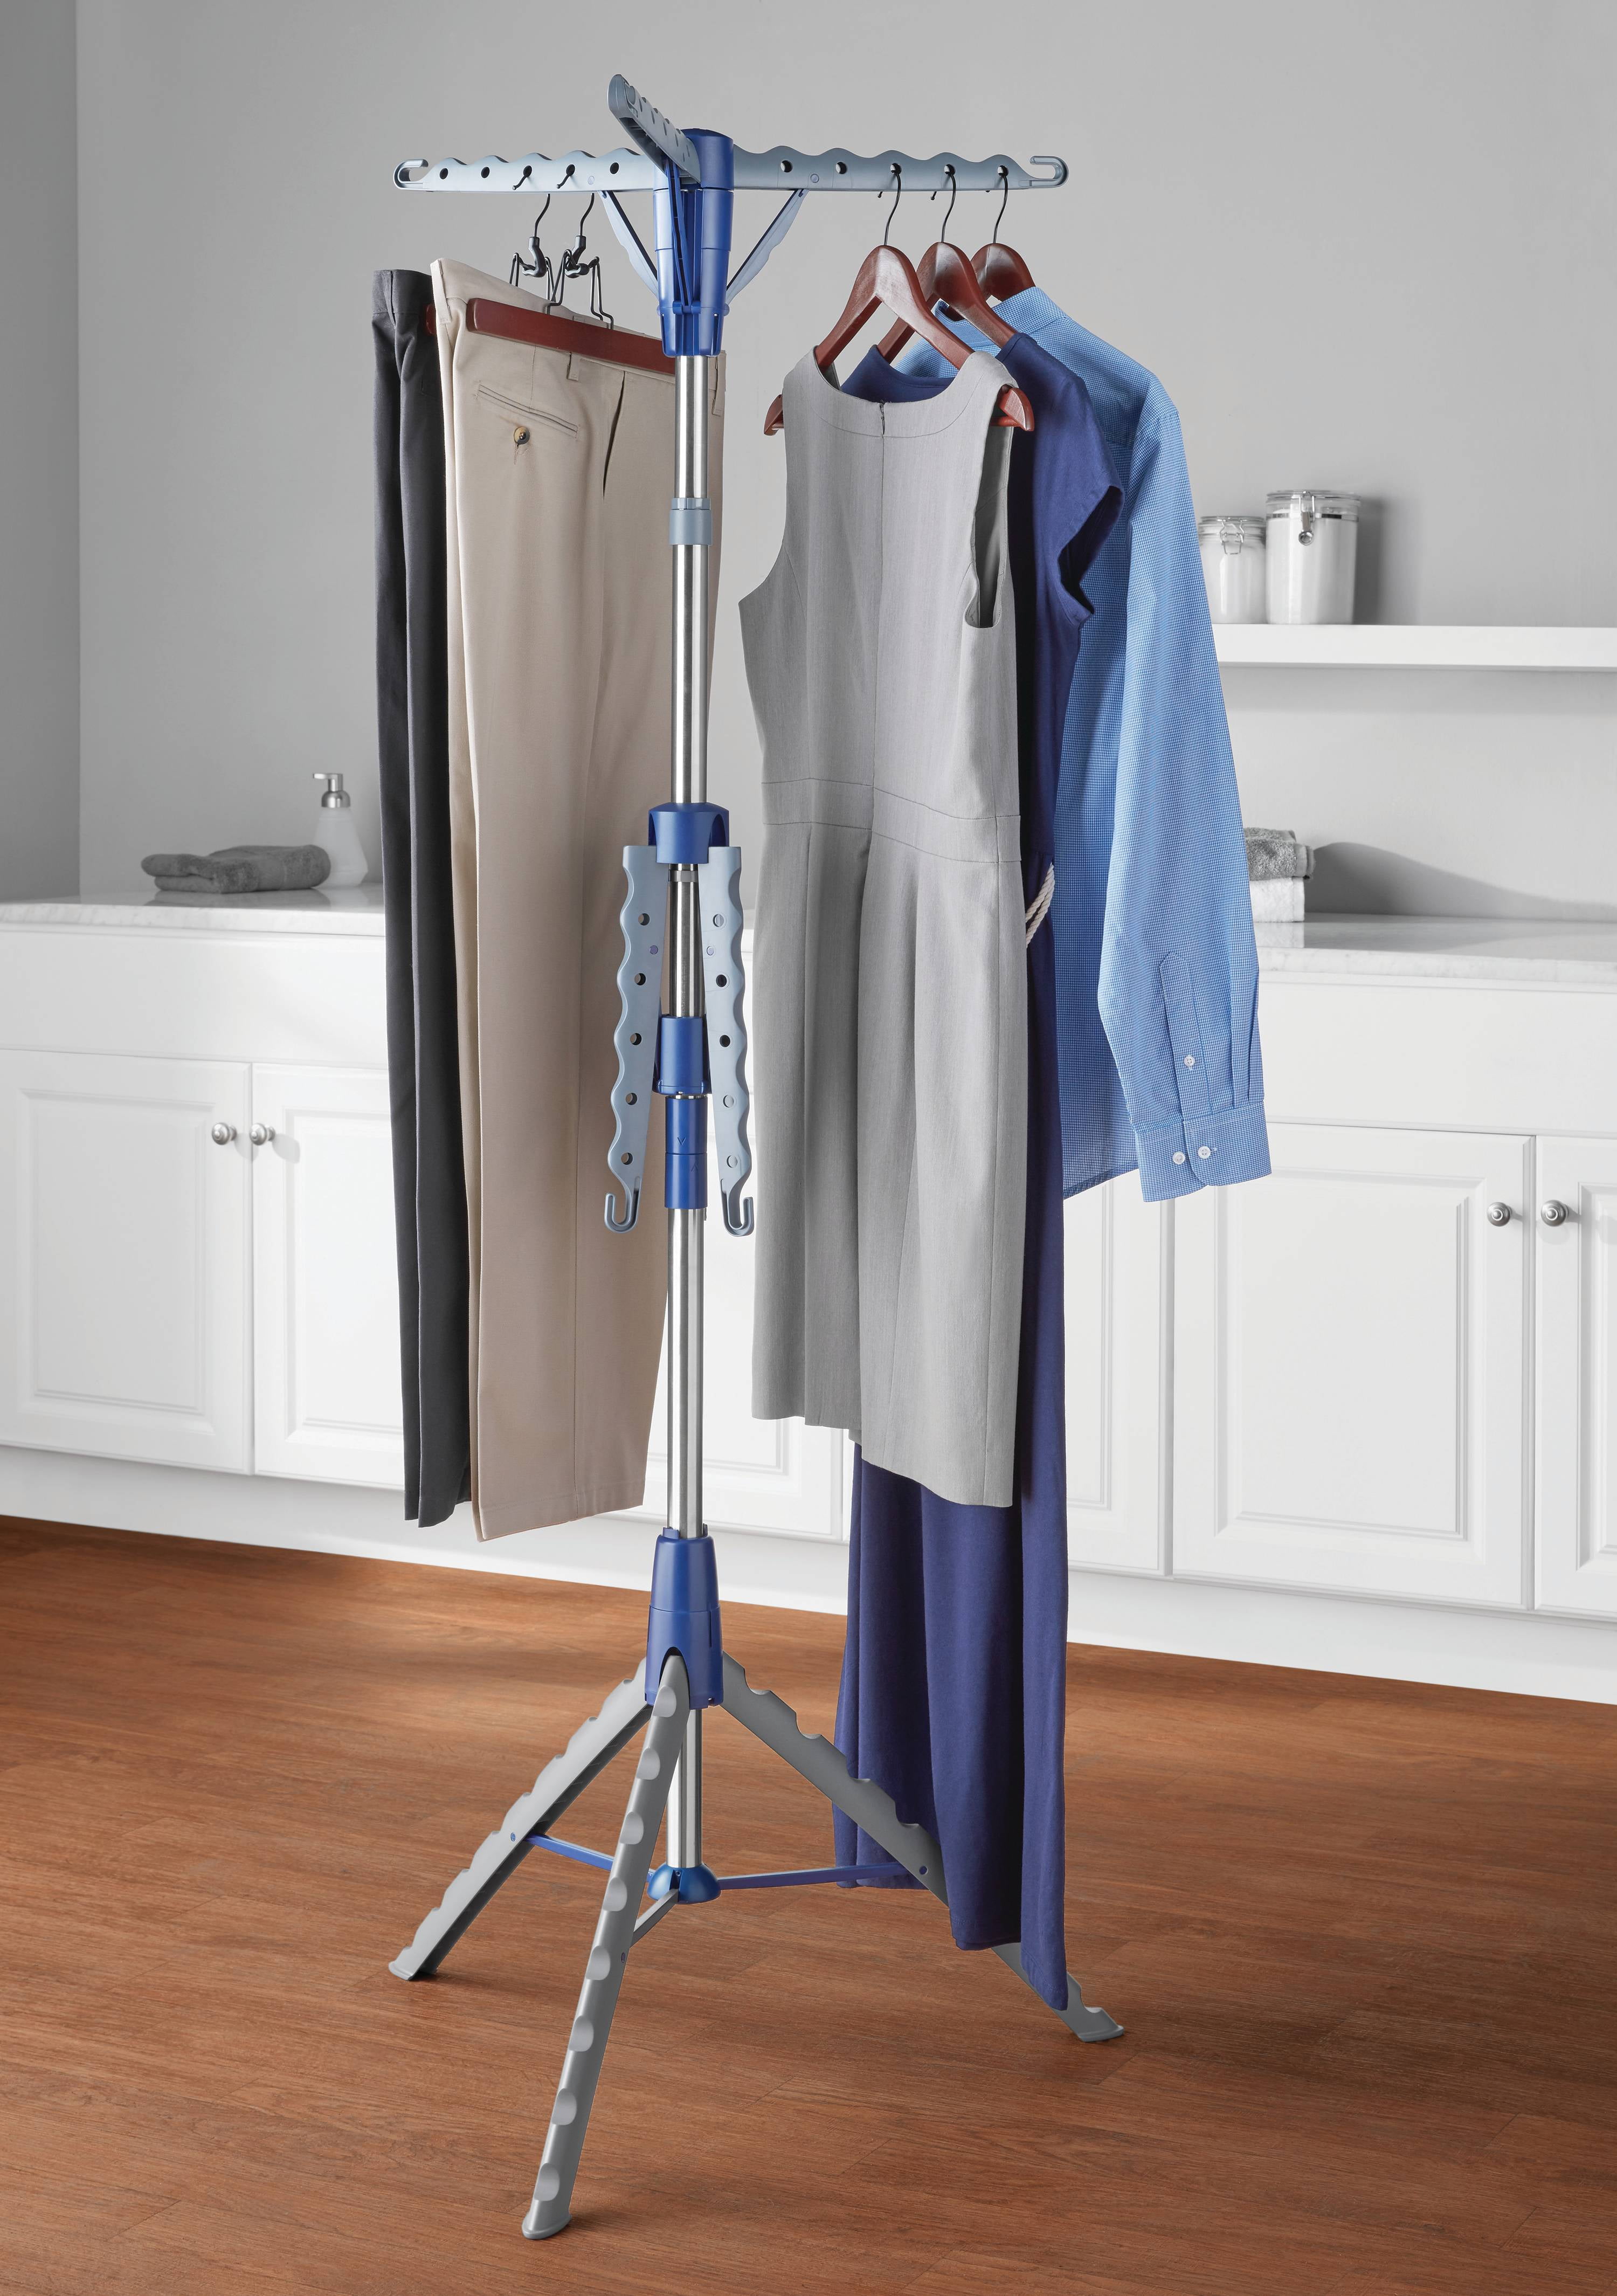 Details about   Oversized Drying Rack Hanging Clothes Indoor Outdoor Durable Rustproof